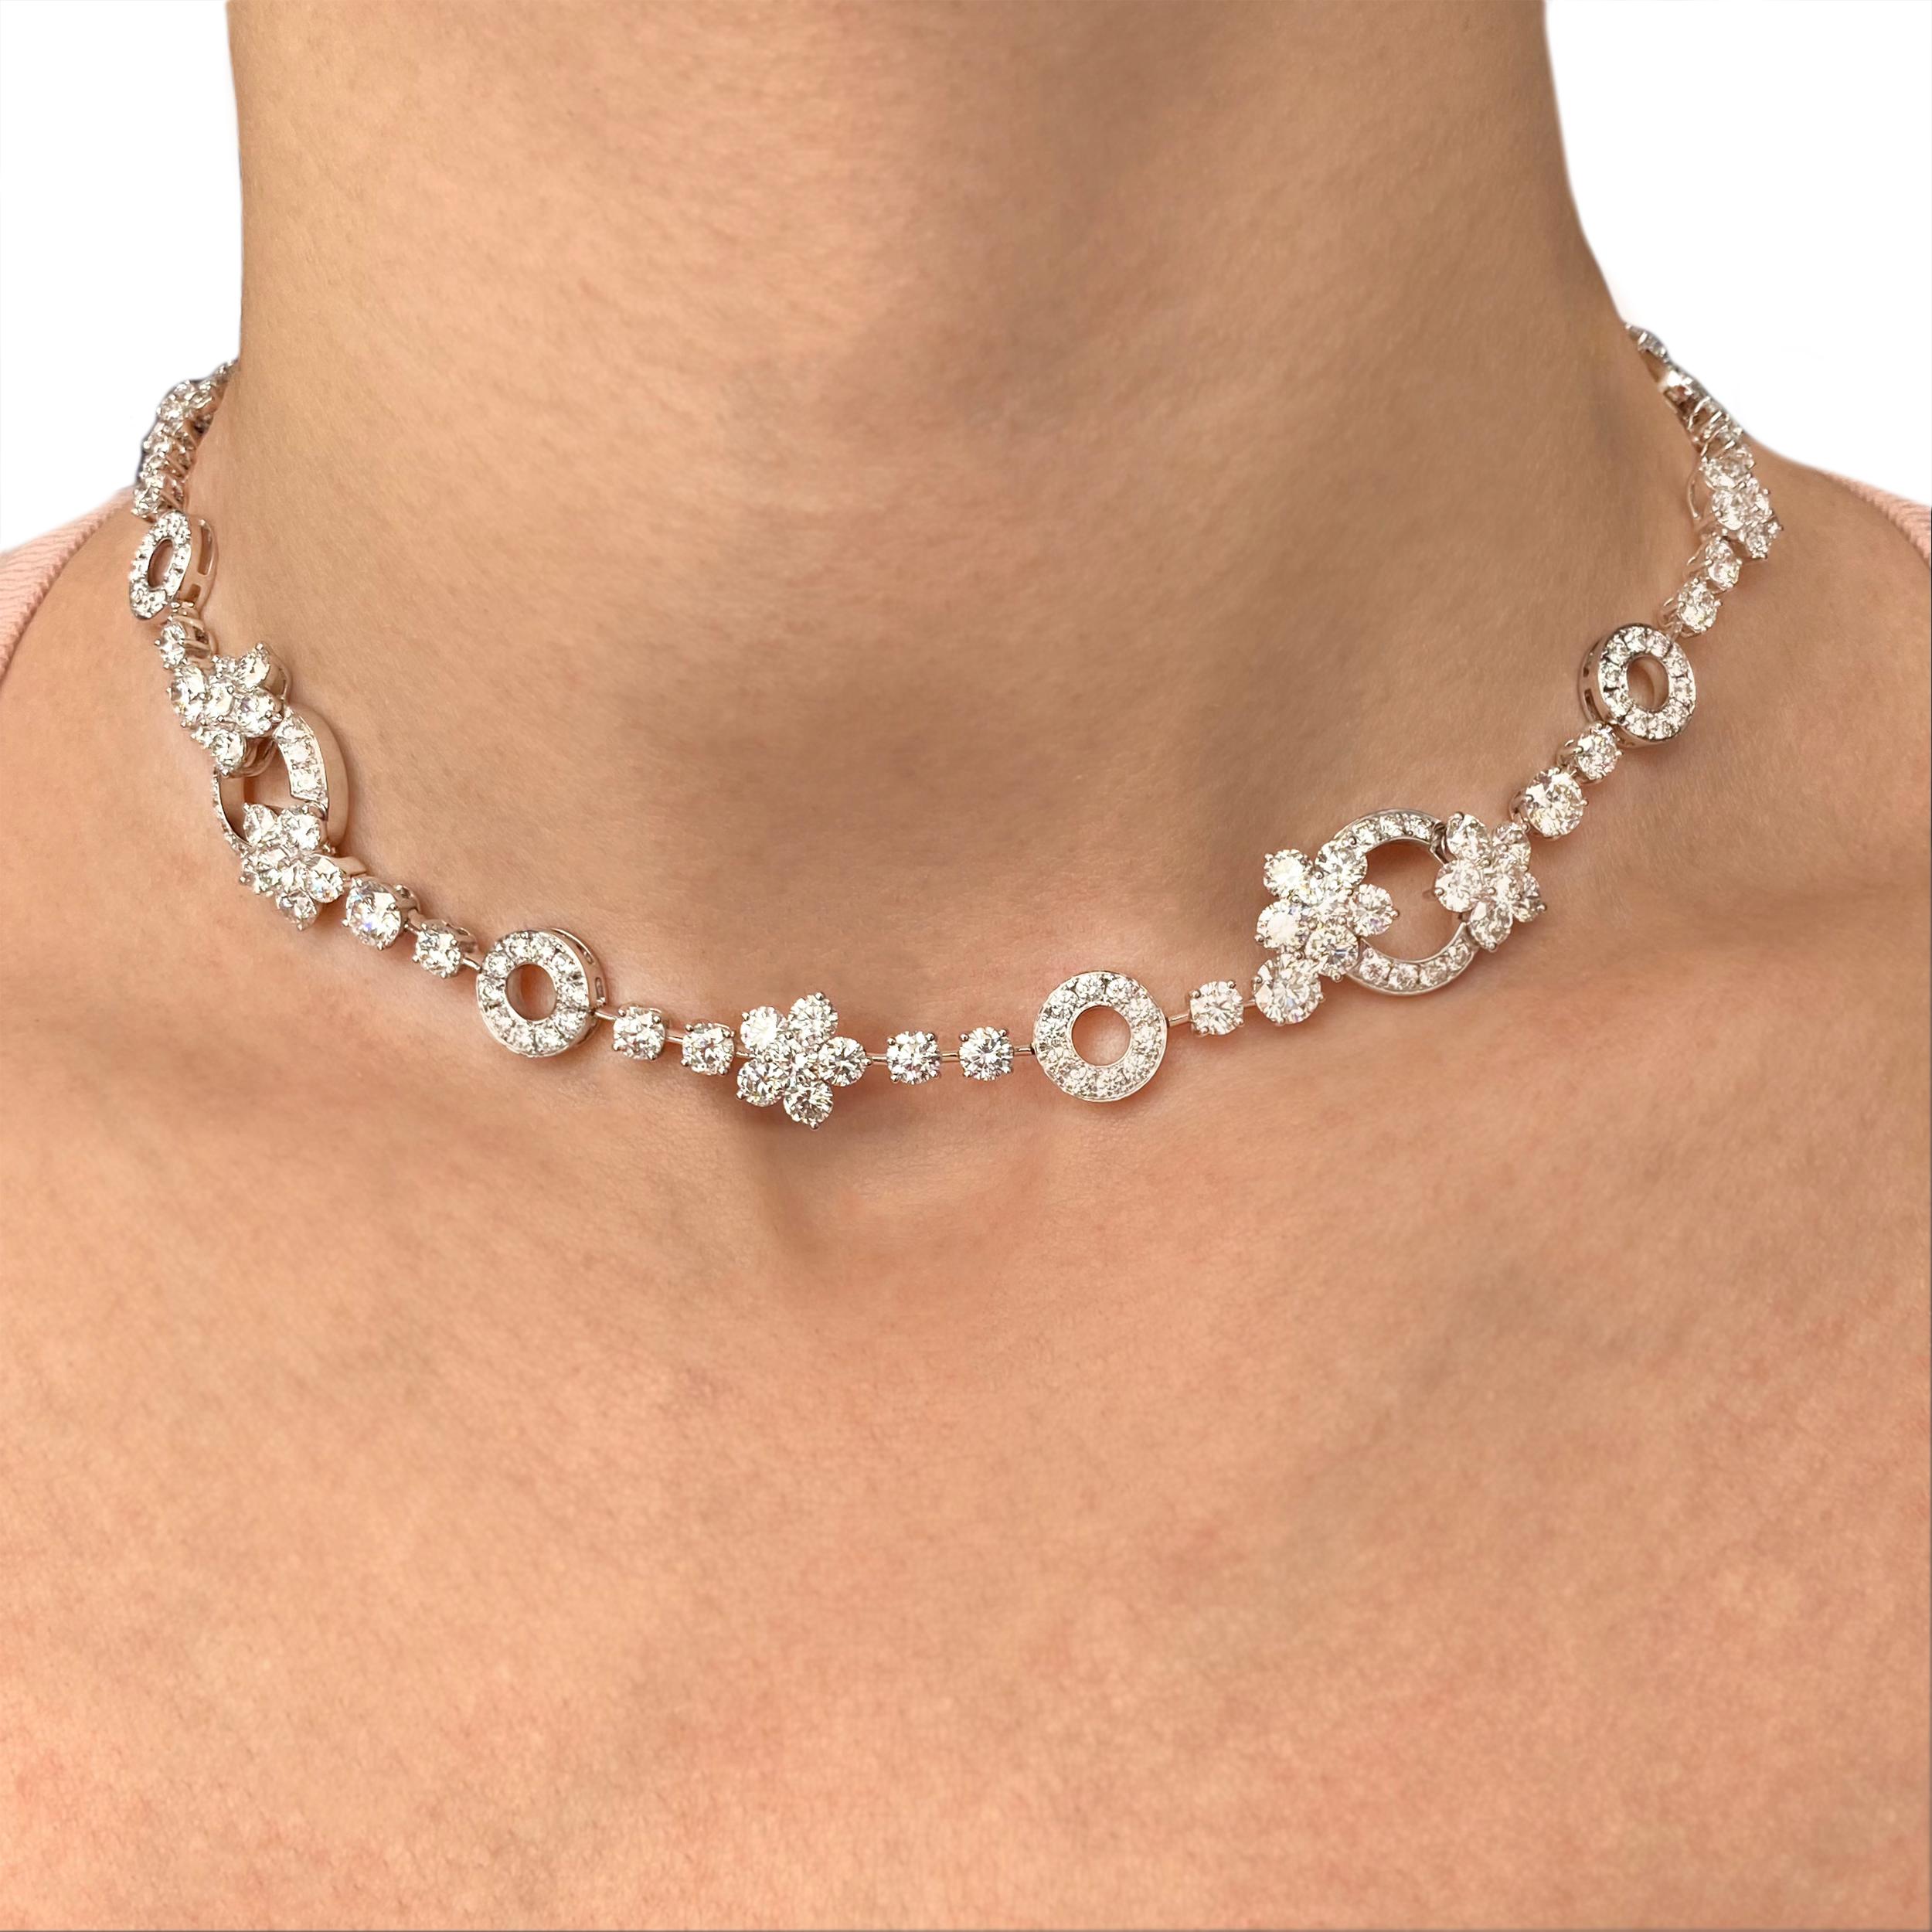 sana graff necklace price